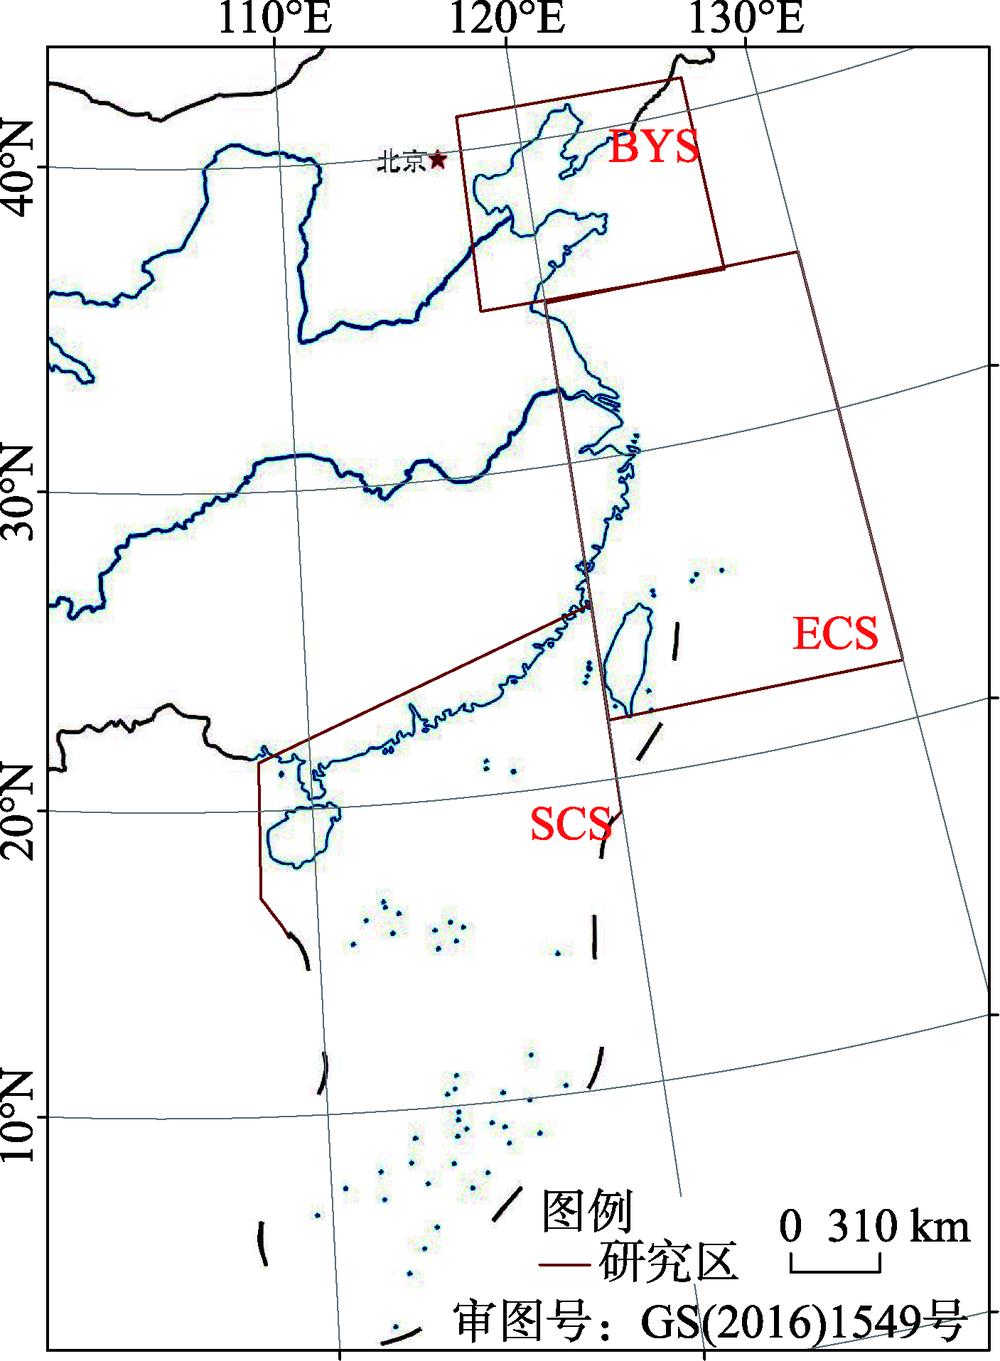 The study area (BYS: Bohai and Yellow Sea; ECS: East China Sea; SCS: South China Sea)